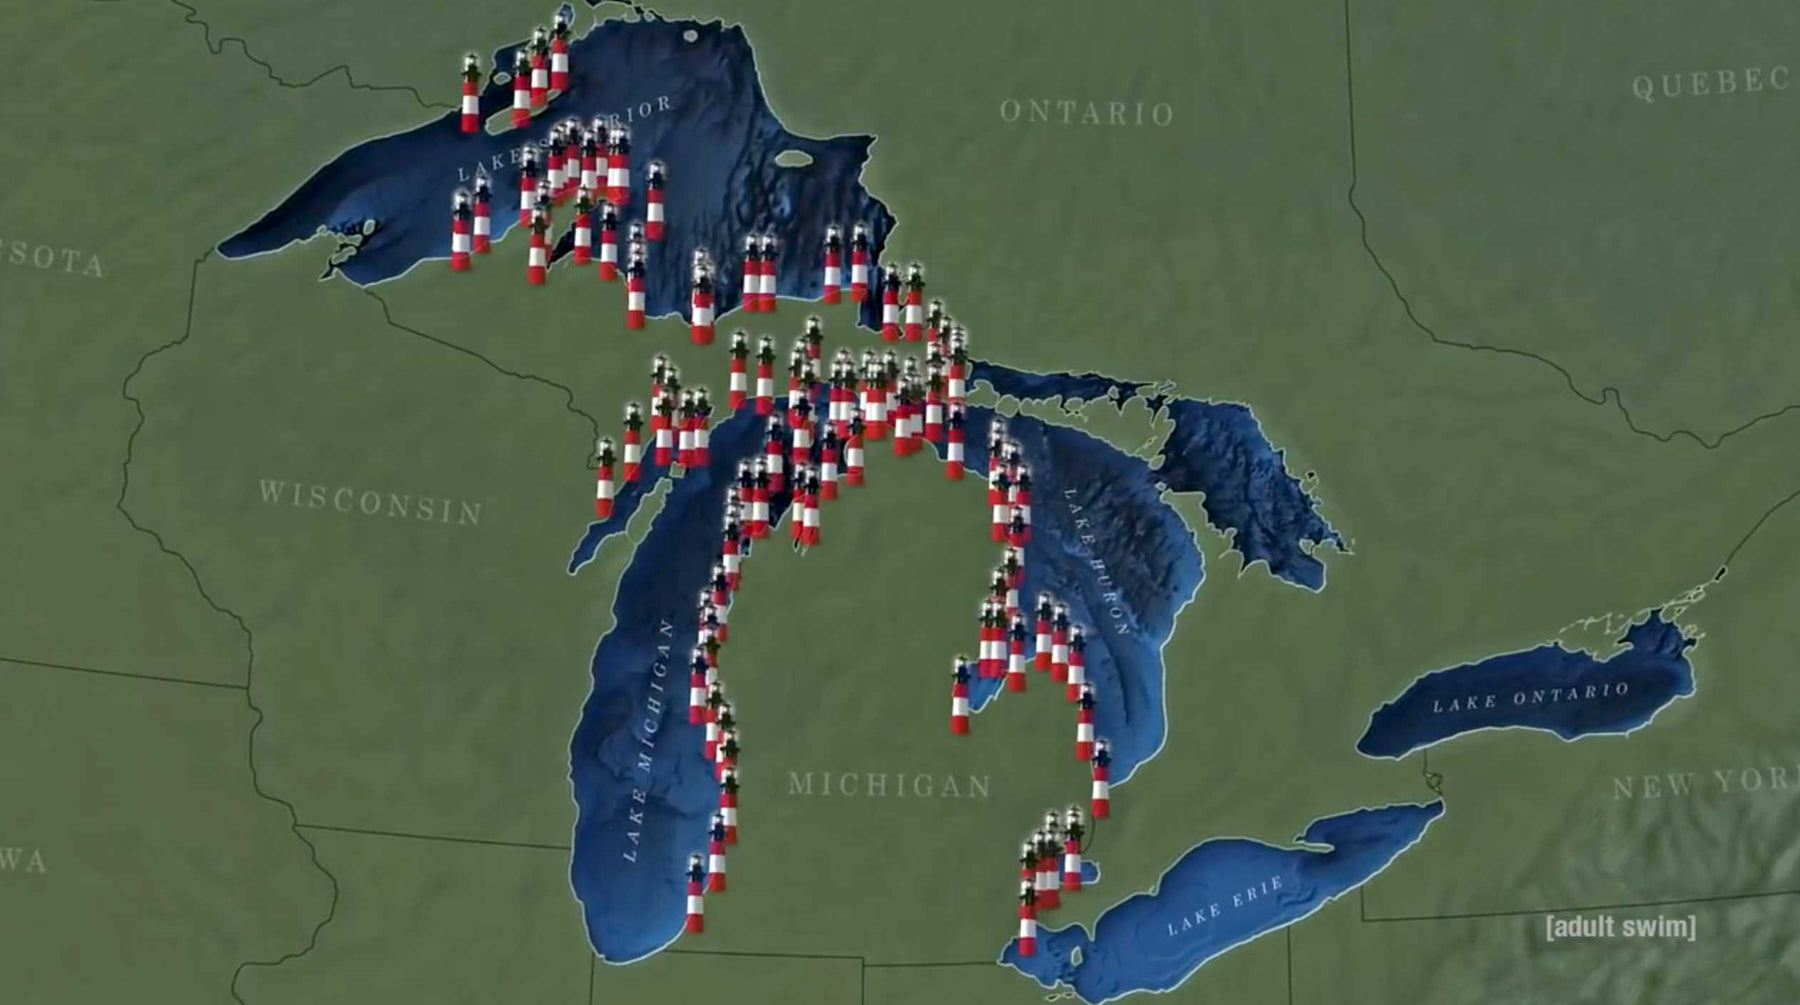 Lighthouse Map of Michigan